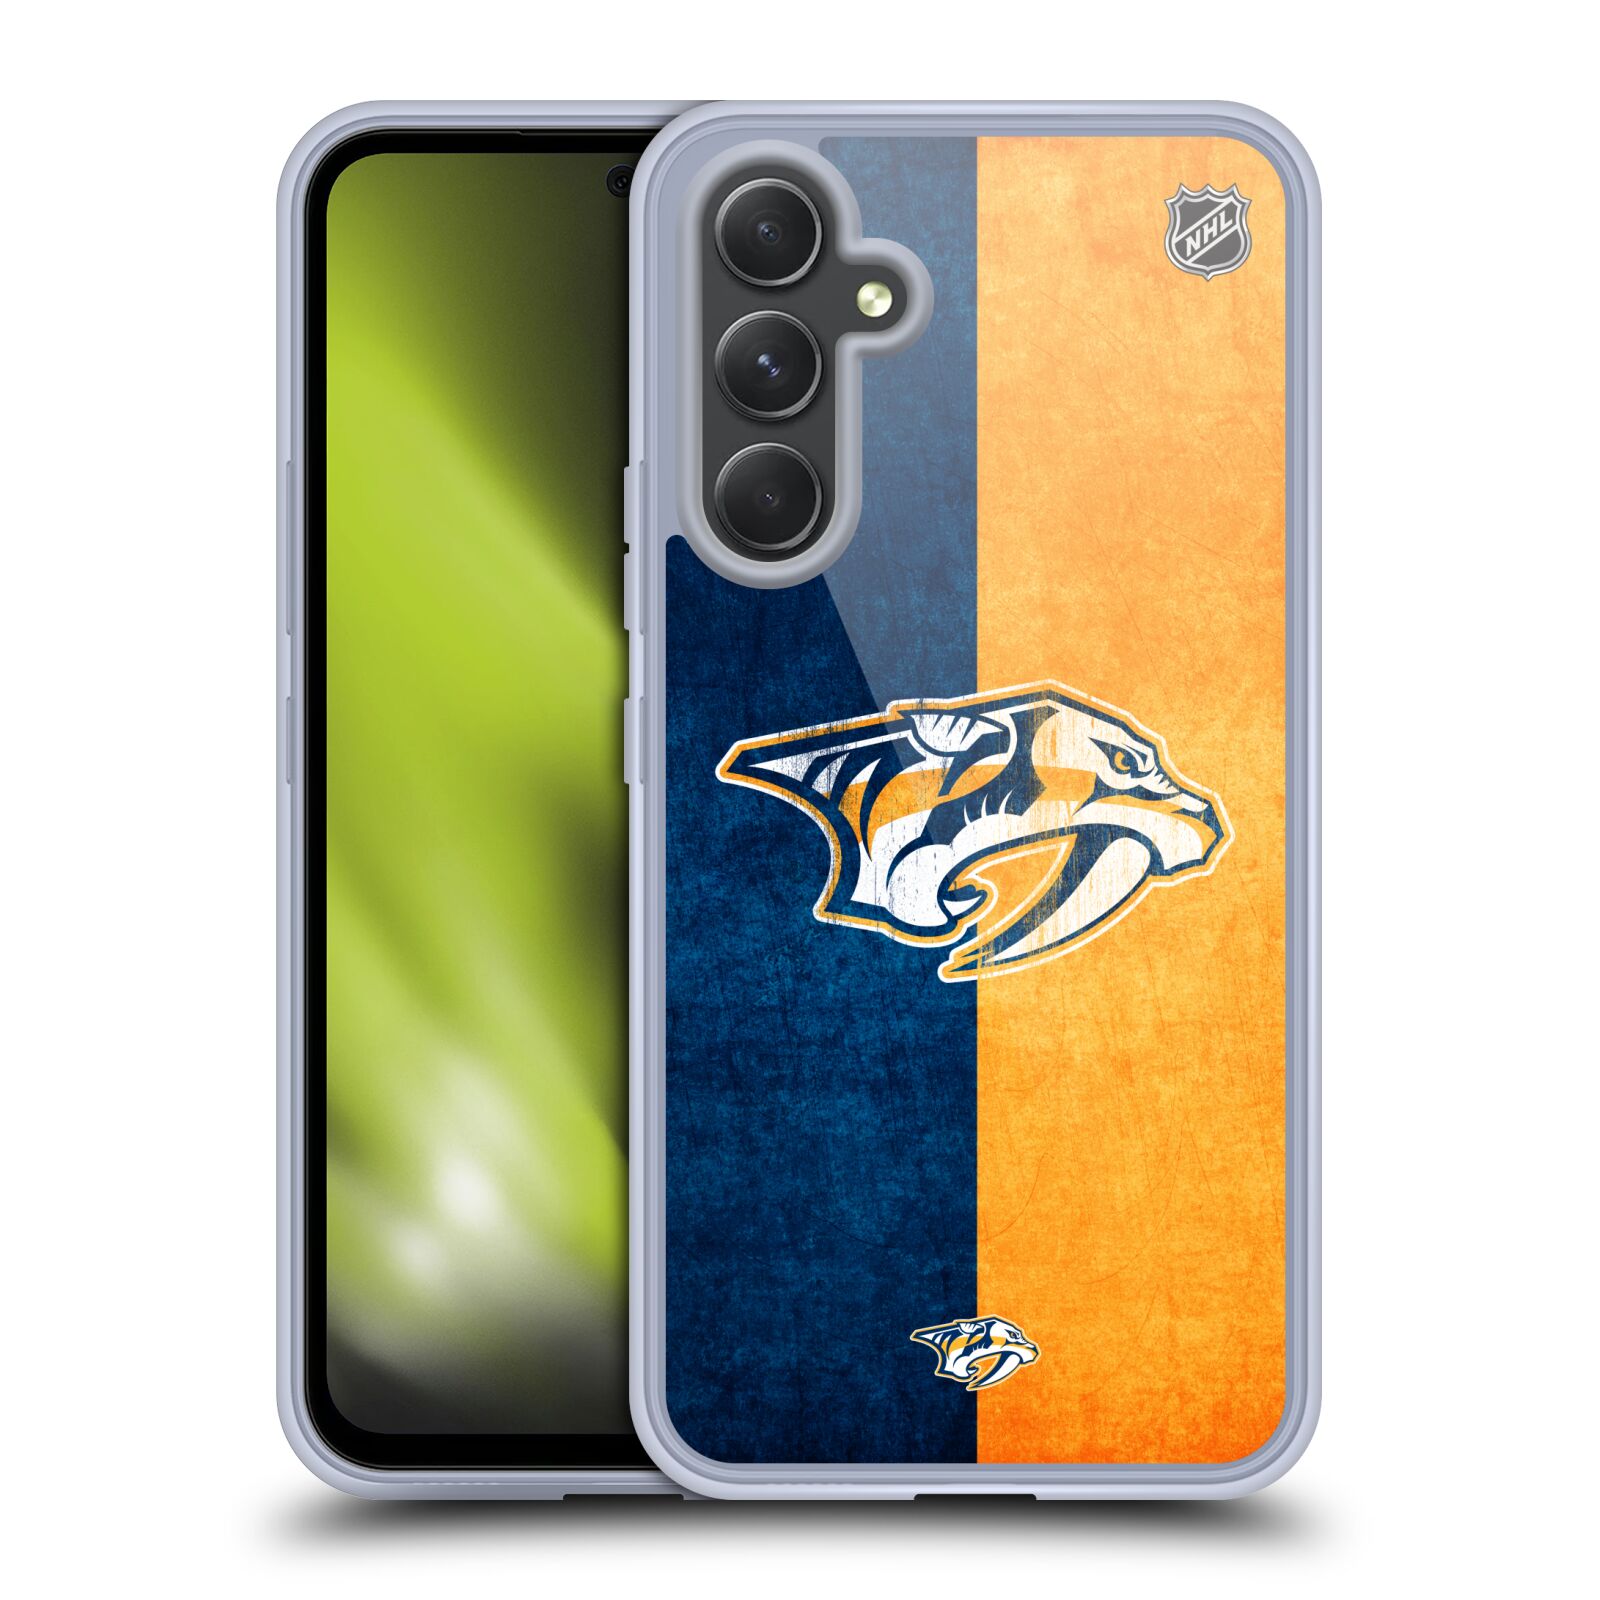 Silikonové pouzdro na mobil Samsung Galaxy A54 5G - NHL - Půlené logo Nashville Predators (Silikonový kryt, obal, pouzdro na mobilní telefon Samsung Galaxy A54 5G s licencovaným motivem NHL - Půlené logo Nashville Predators)